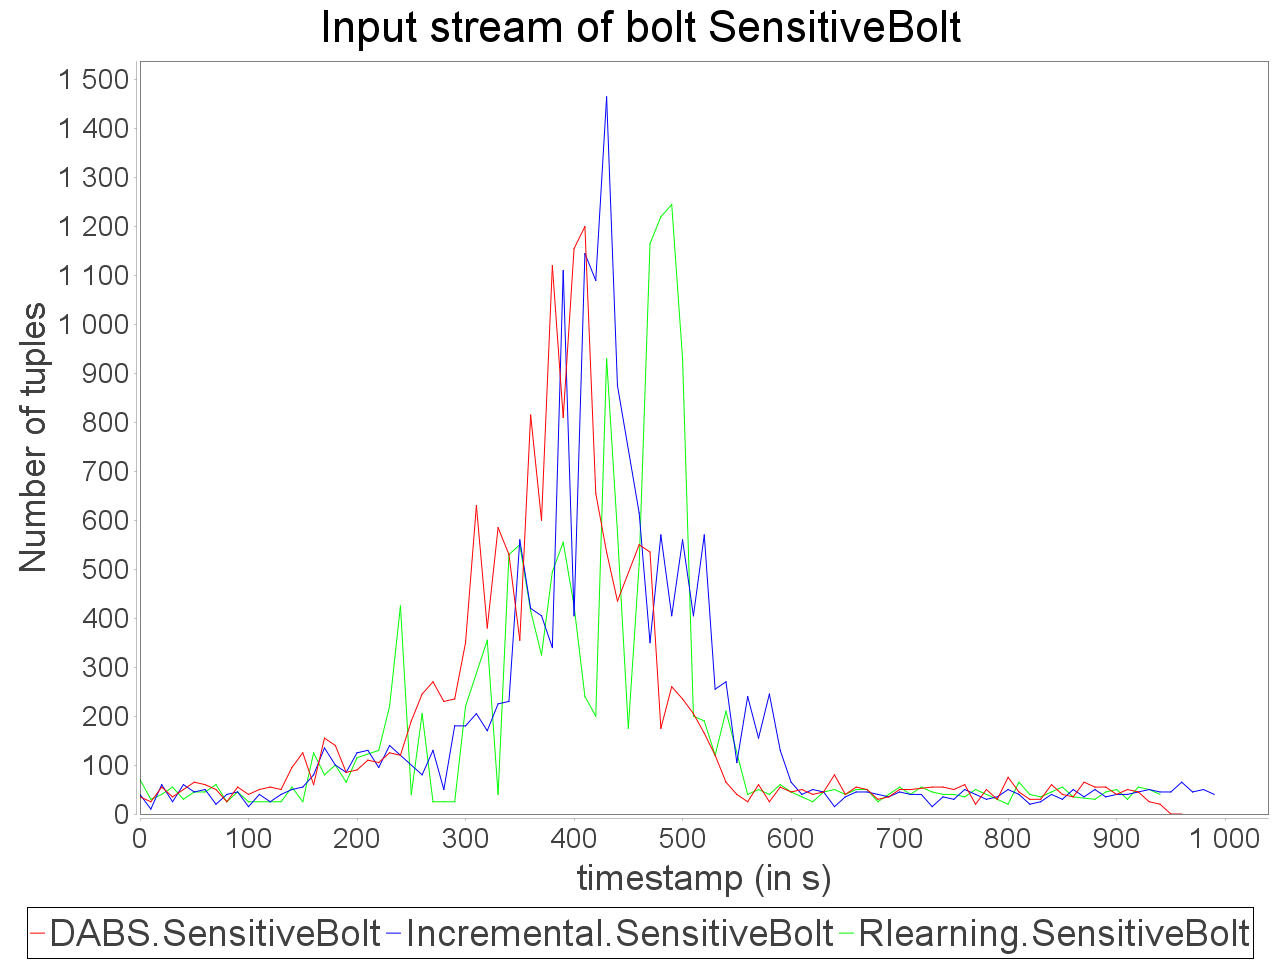 Input of sensitive bolt